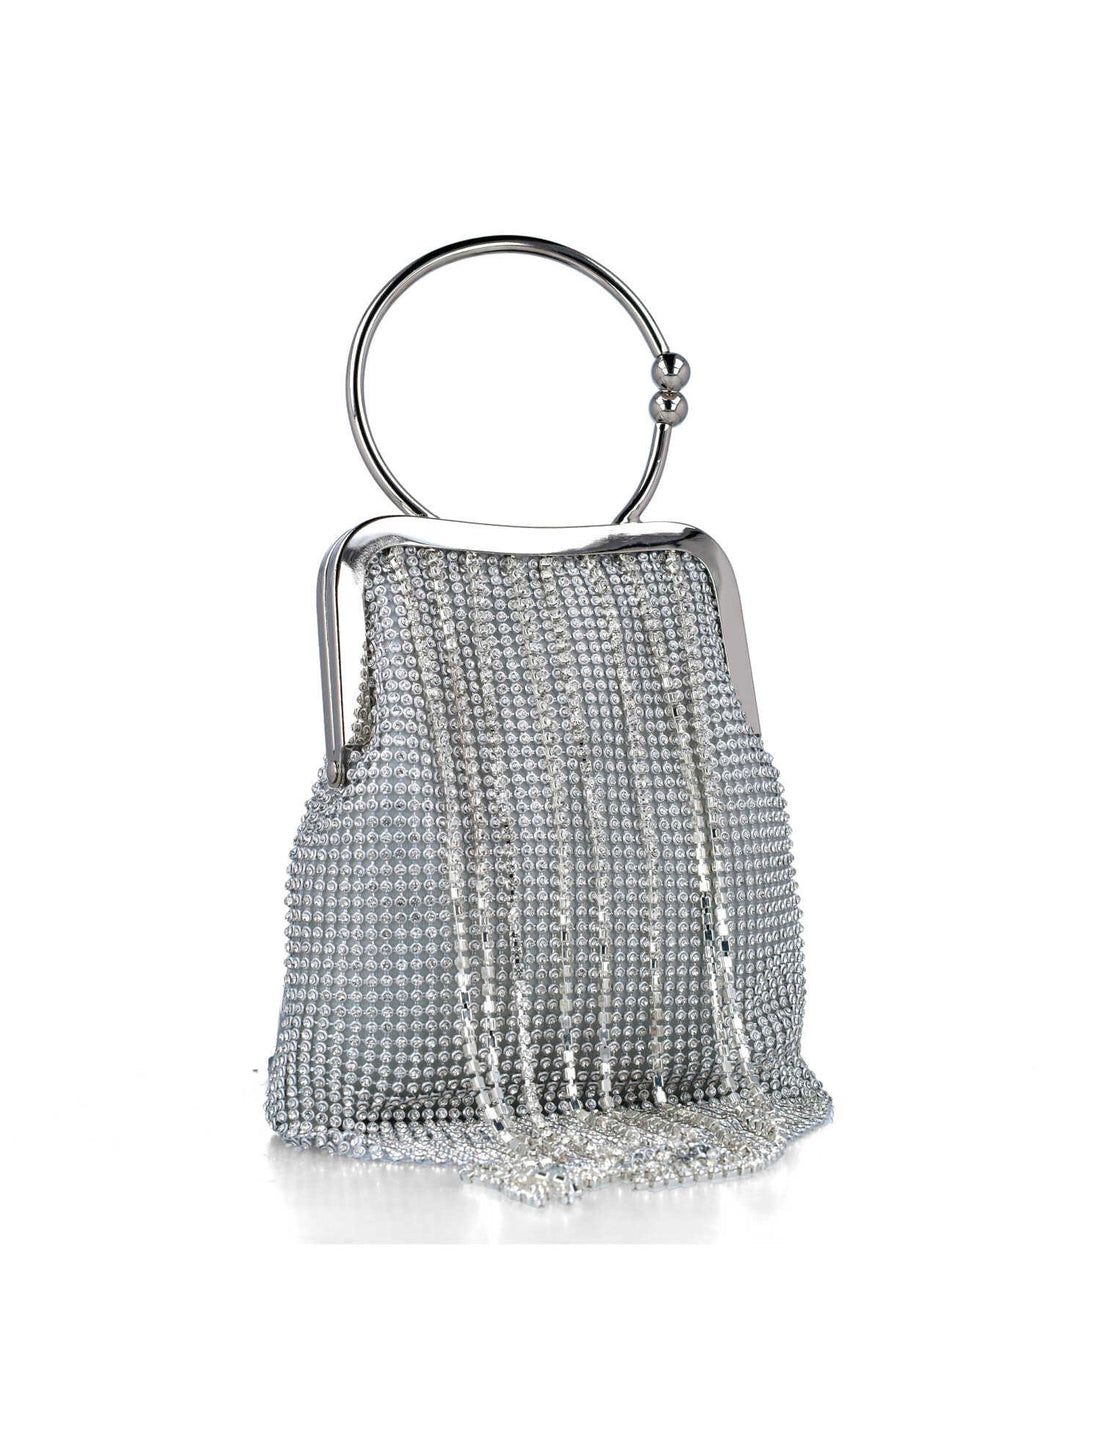 Embellished Handbag With Round Handles_85687_09_02